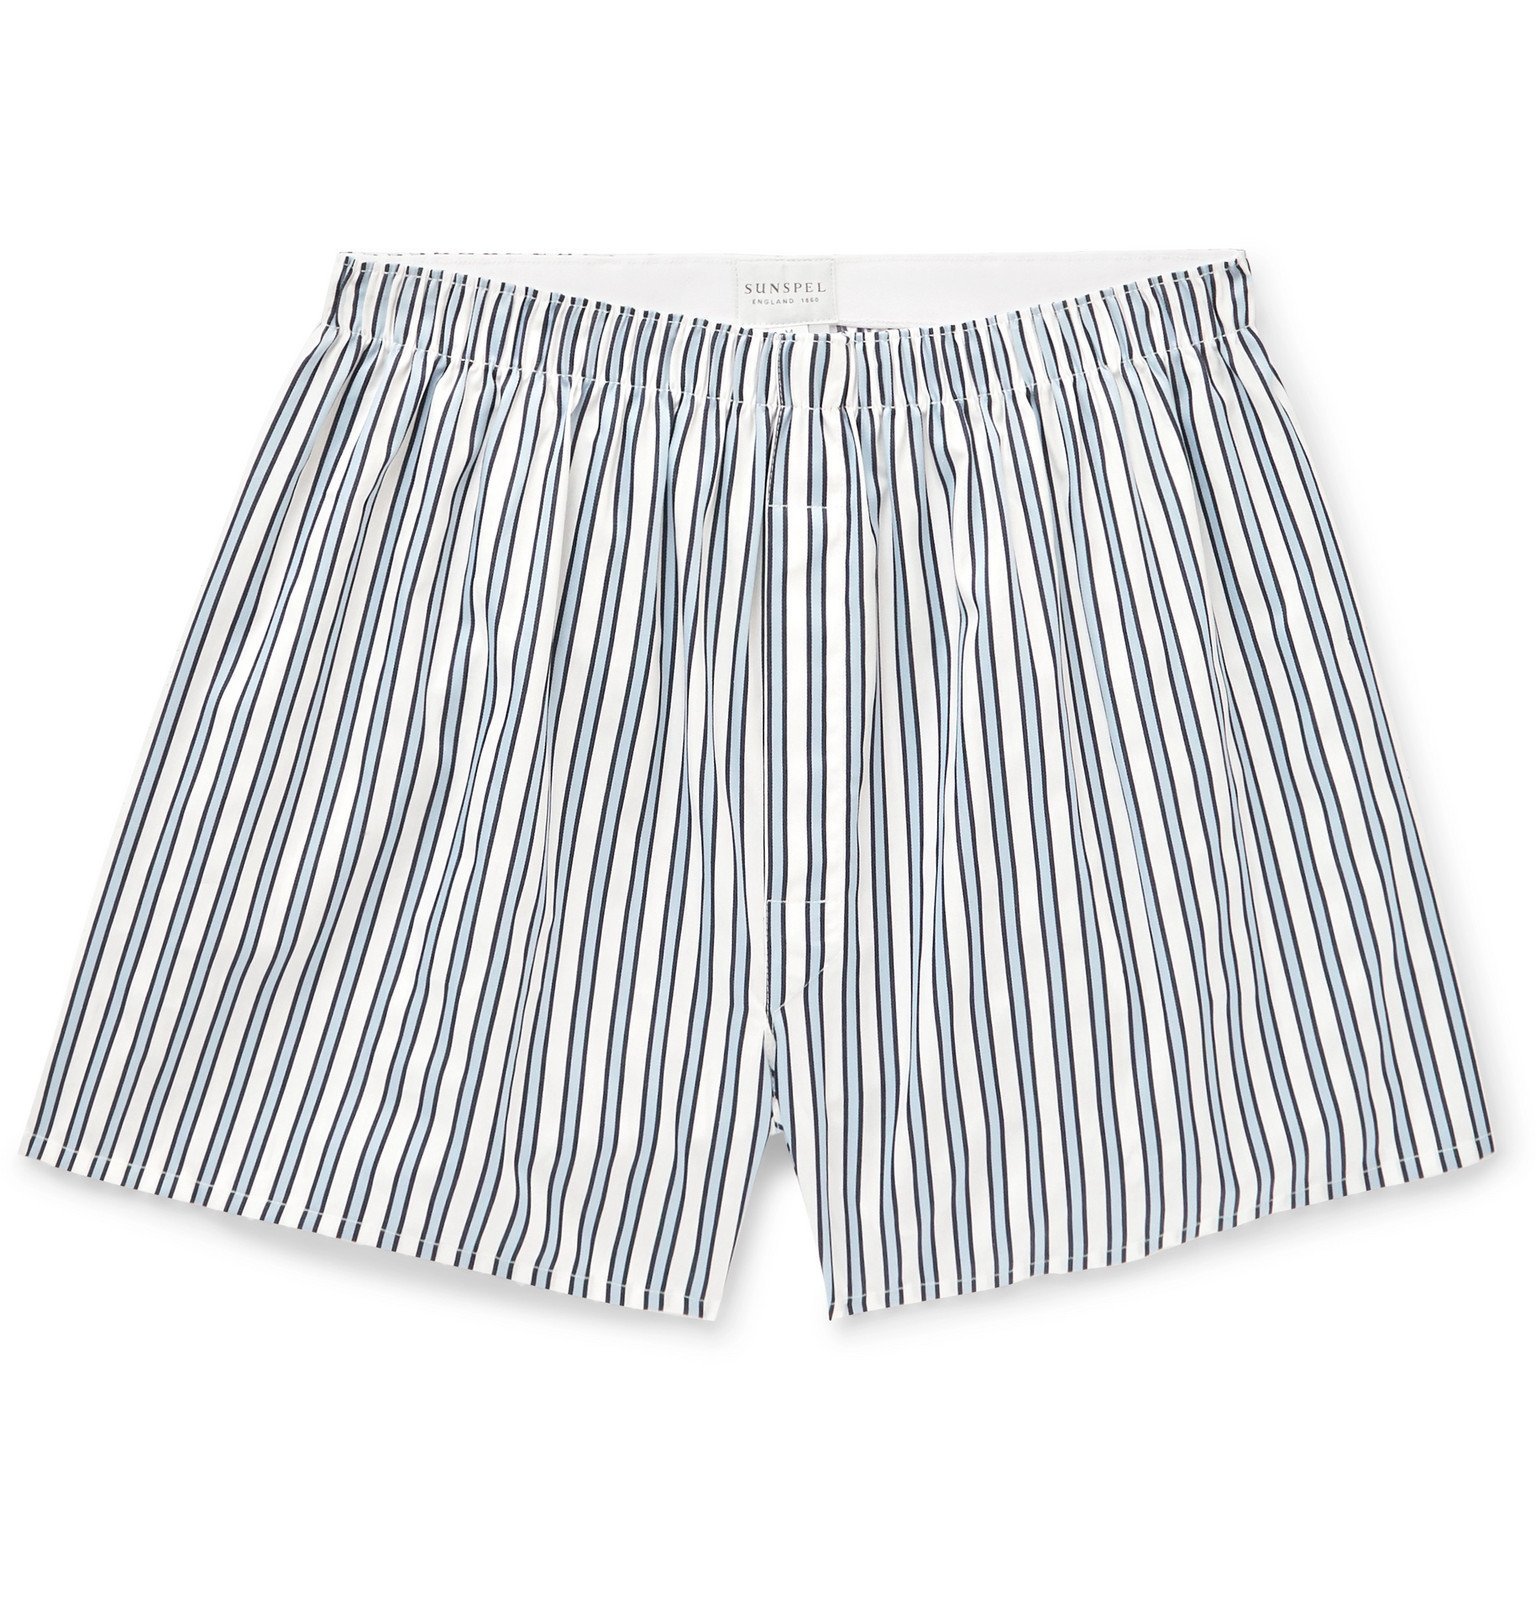 Sunspel - Striped Cotton Boxer Shorts - Blue Sunspel